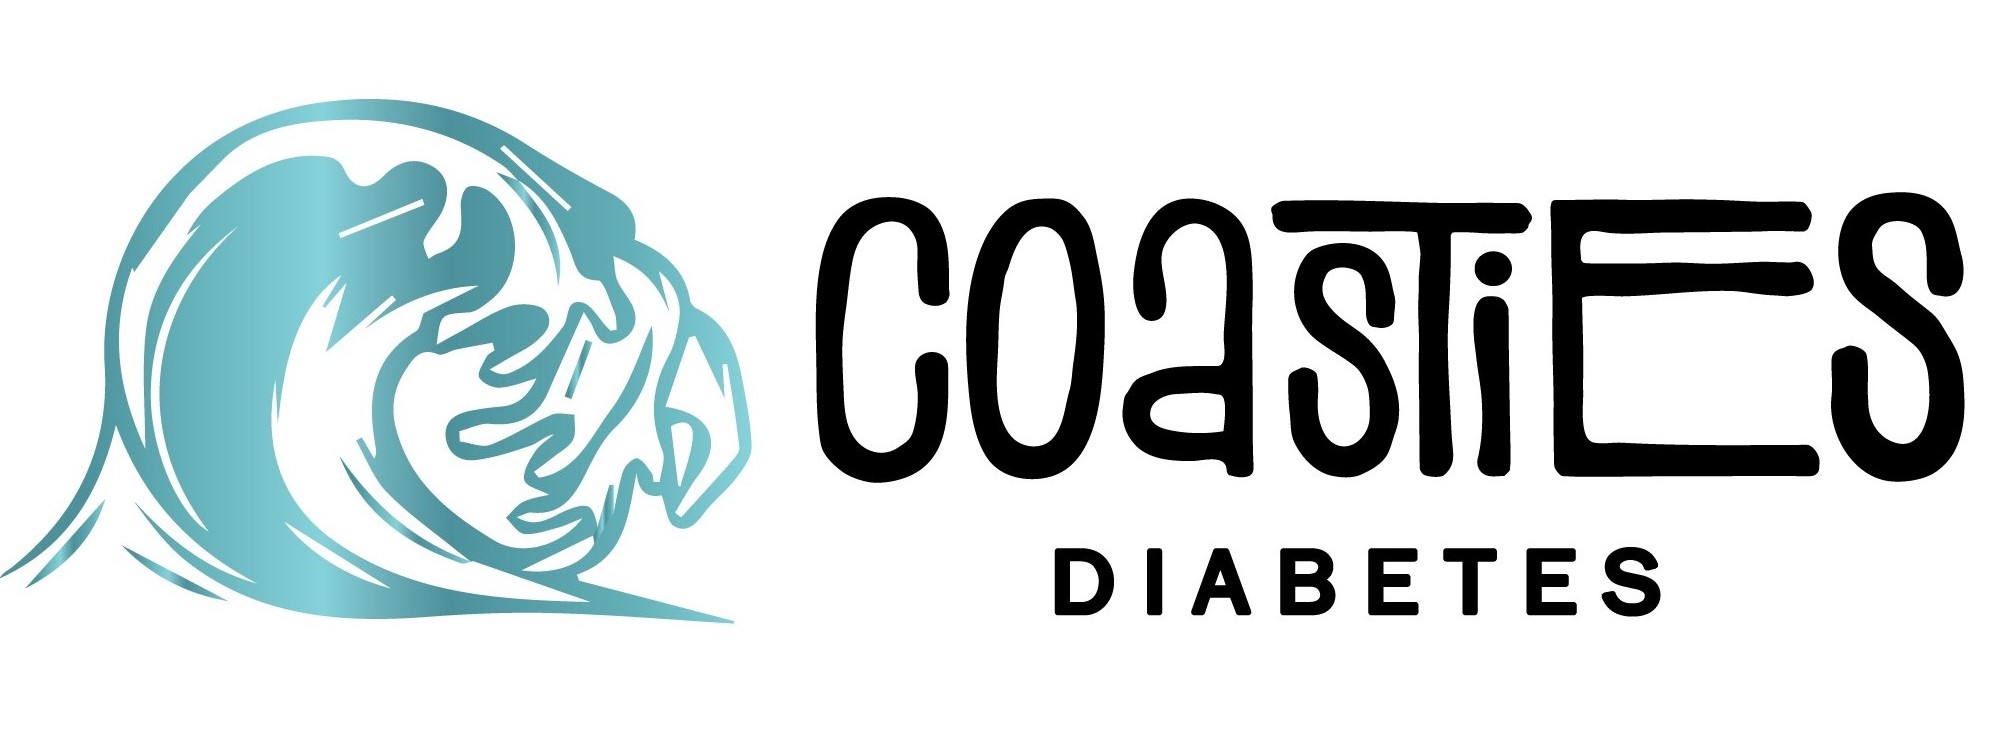 Coasties Diabetes